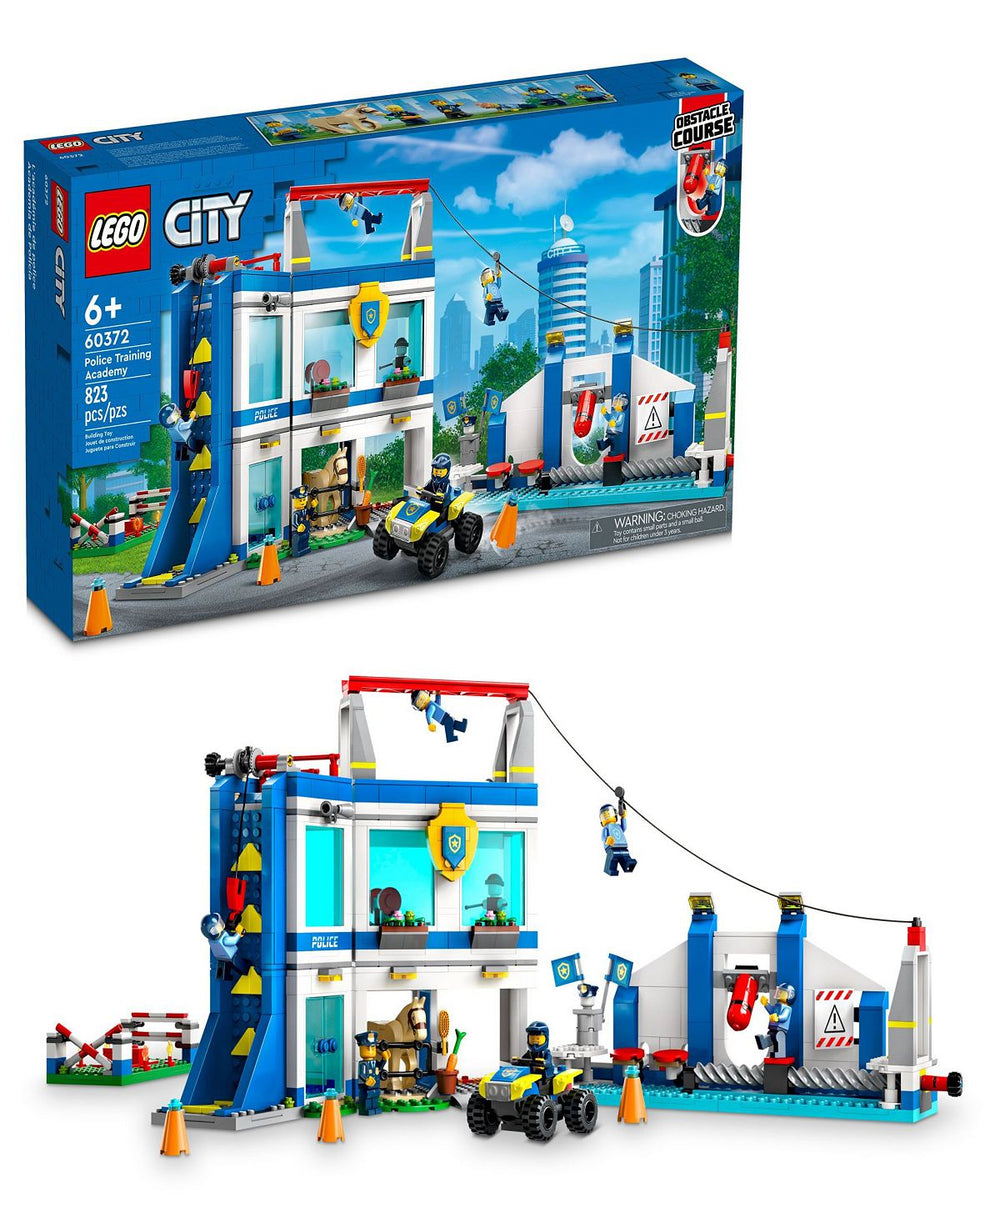 LEGO City Police Training Academy 60372 Building Set - 823 Pieces